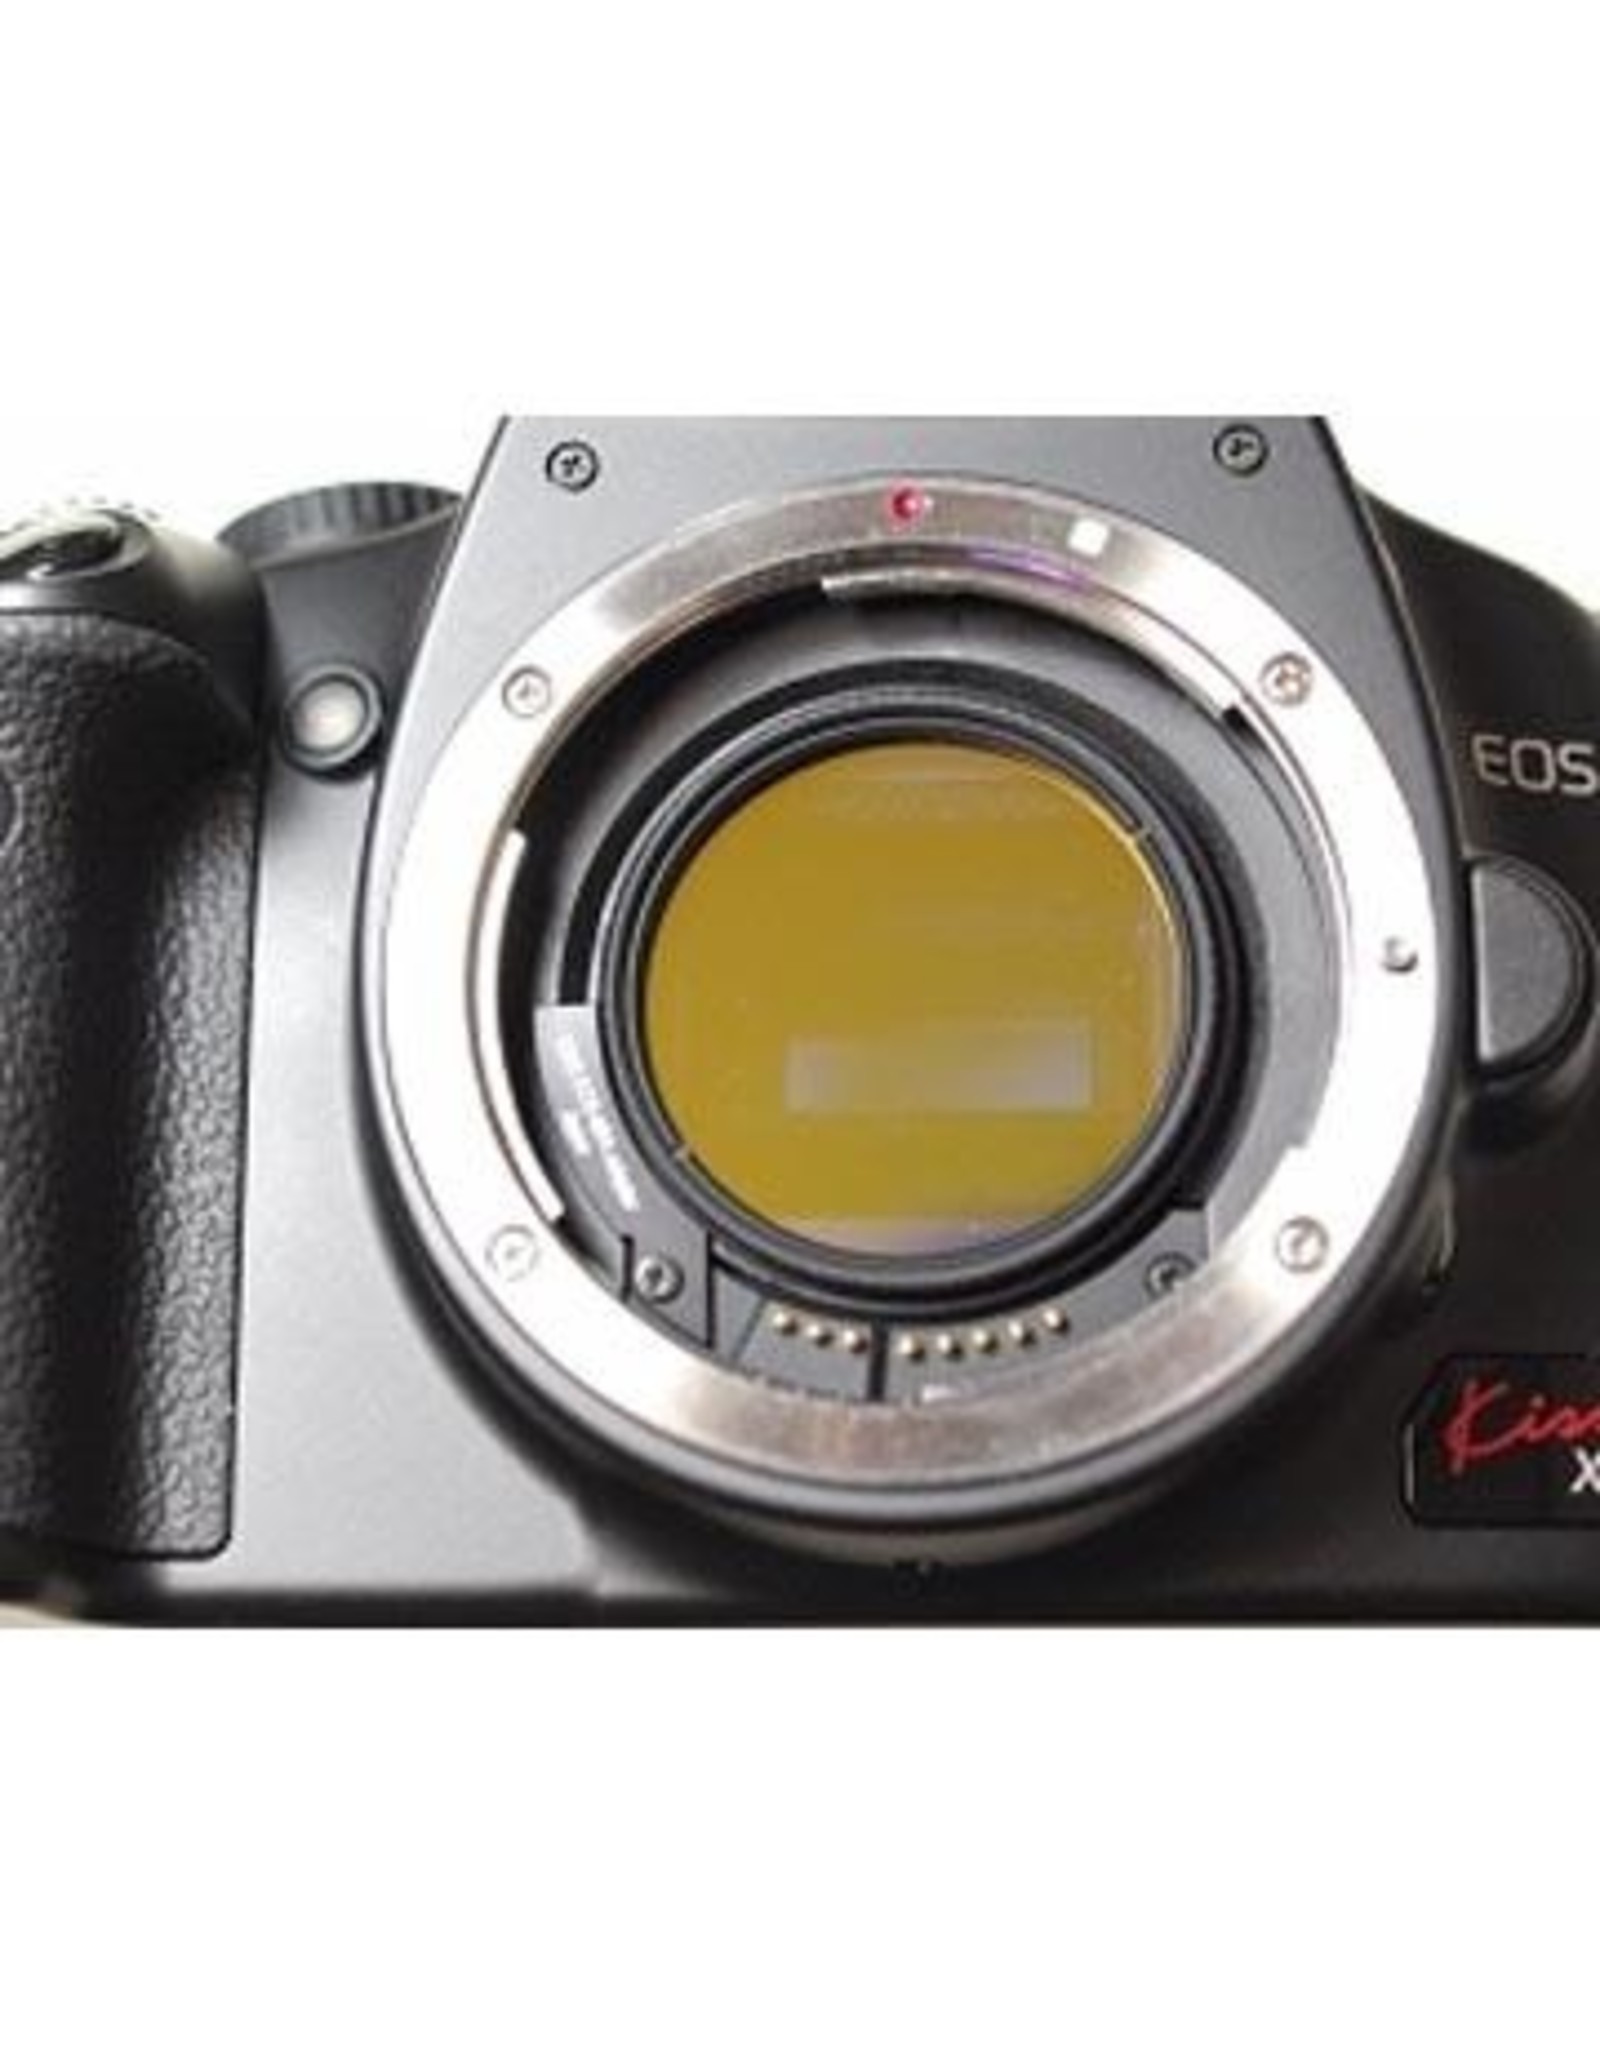 Hutech CLIP IDAS Nebula Clip Filter LPS-V4 - for Canon EOS DSLR -